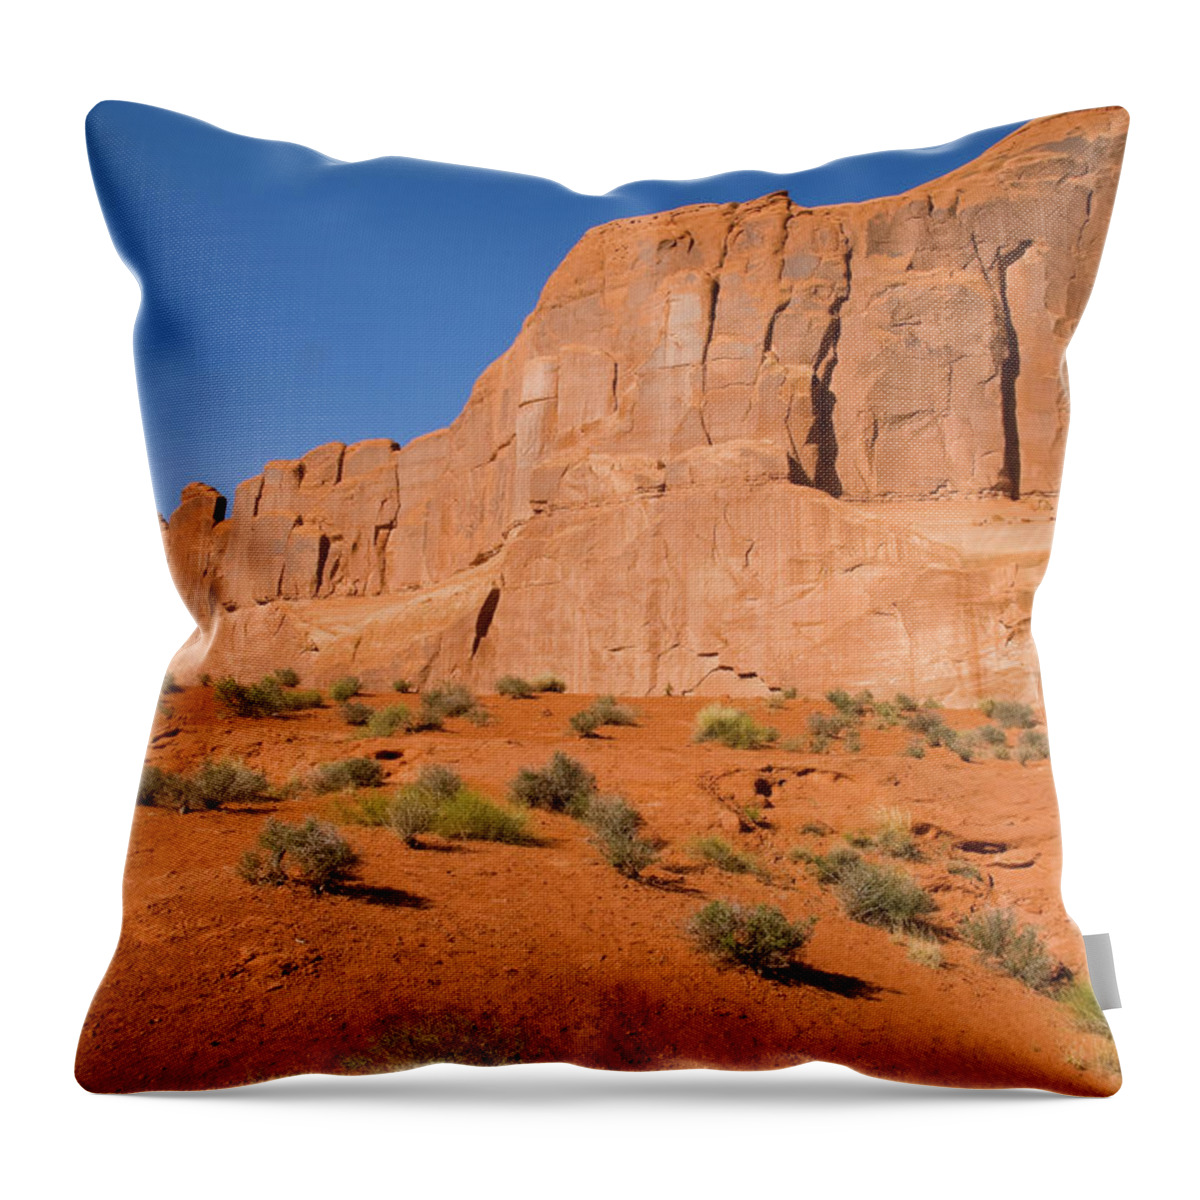 Utah Throw Pillow featuring the photograph Park Avenue by Steve Stuller